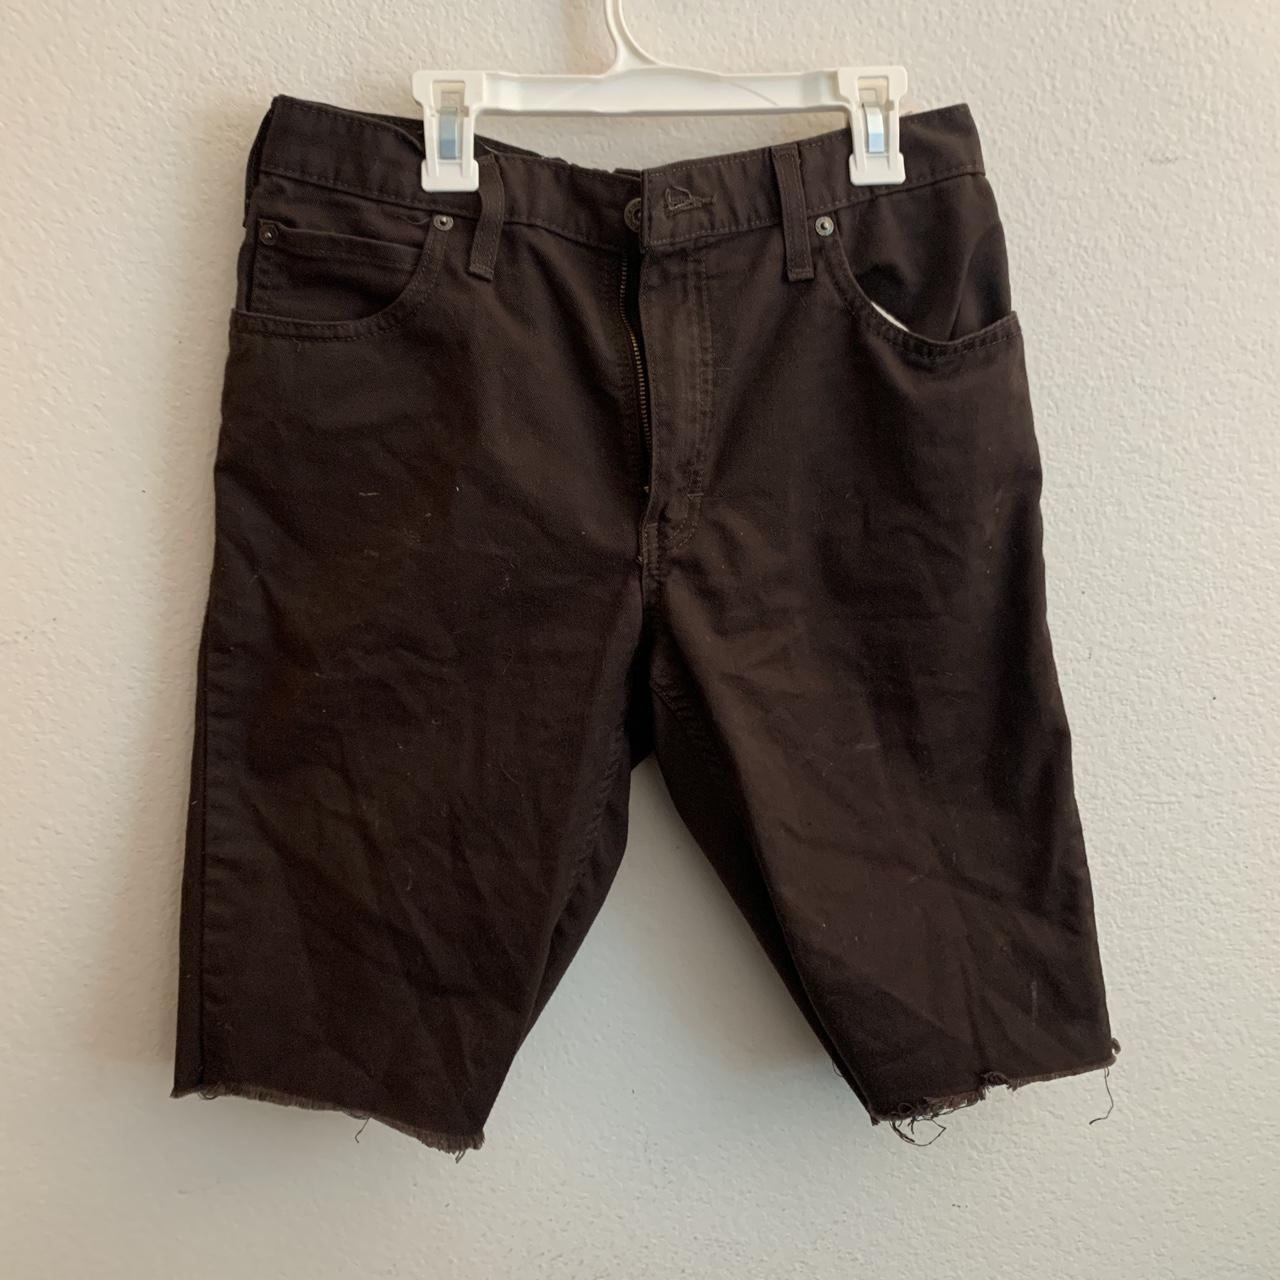 Dickies Men's Brown Shorts | Depop